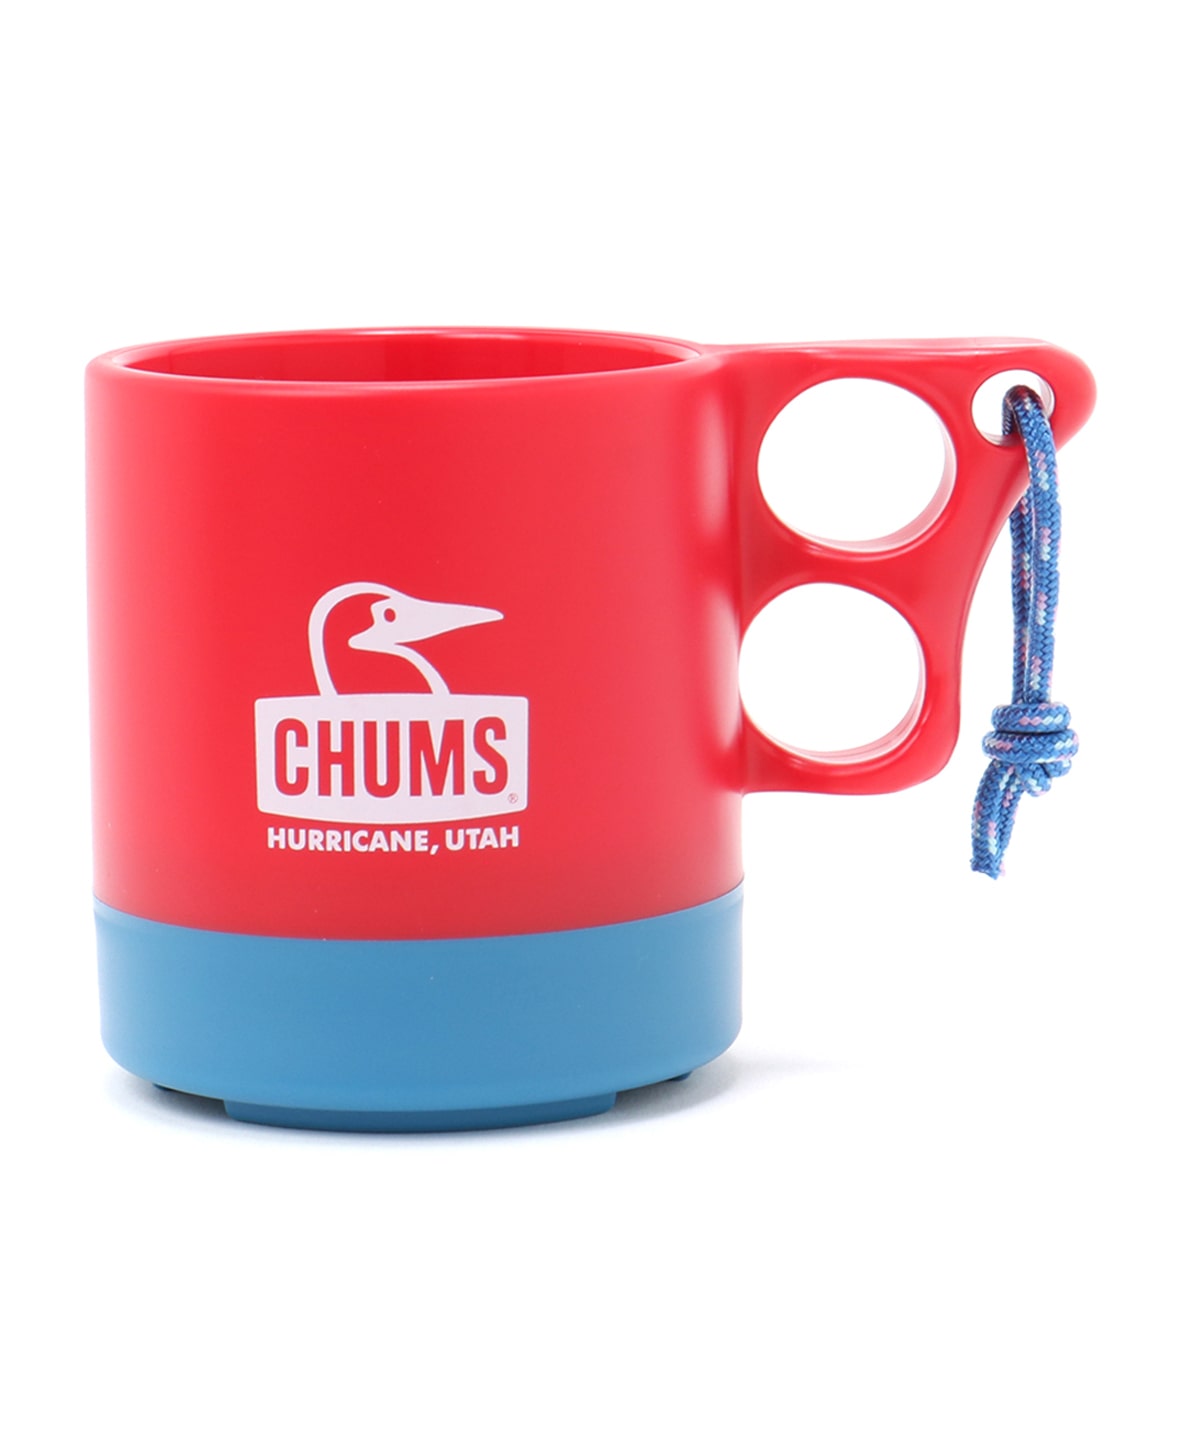 CHUMS CAMP 2022 Camper Mug Cup(【限定】チャムスキャンプ2022キャンパーマグカップ(食器/カップ))